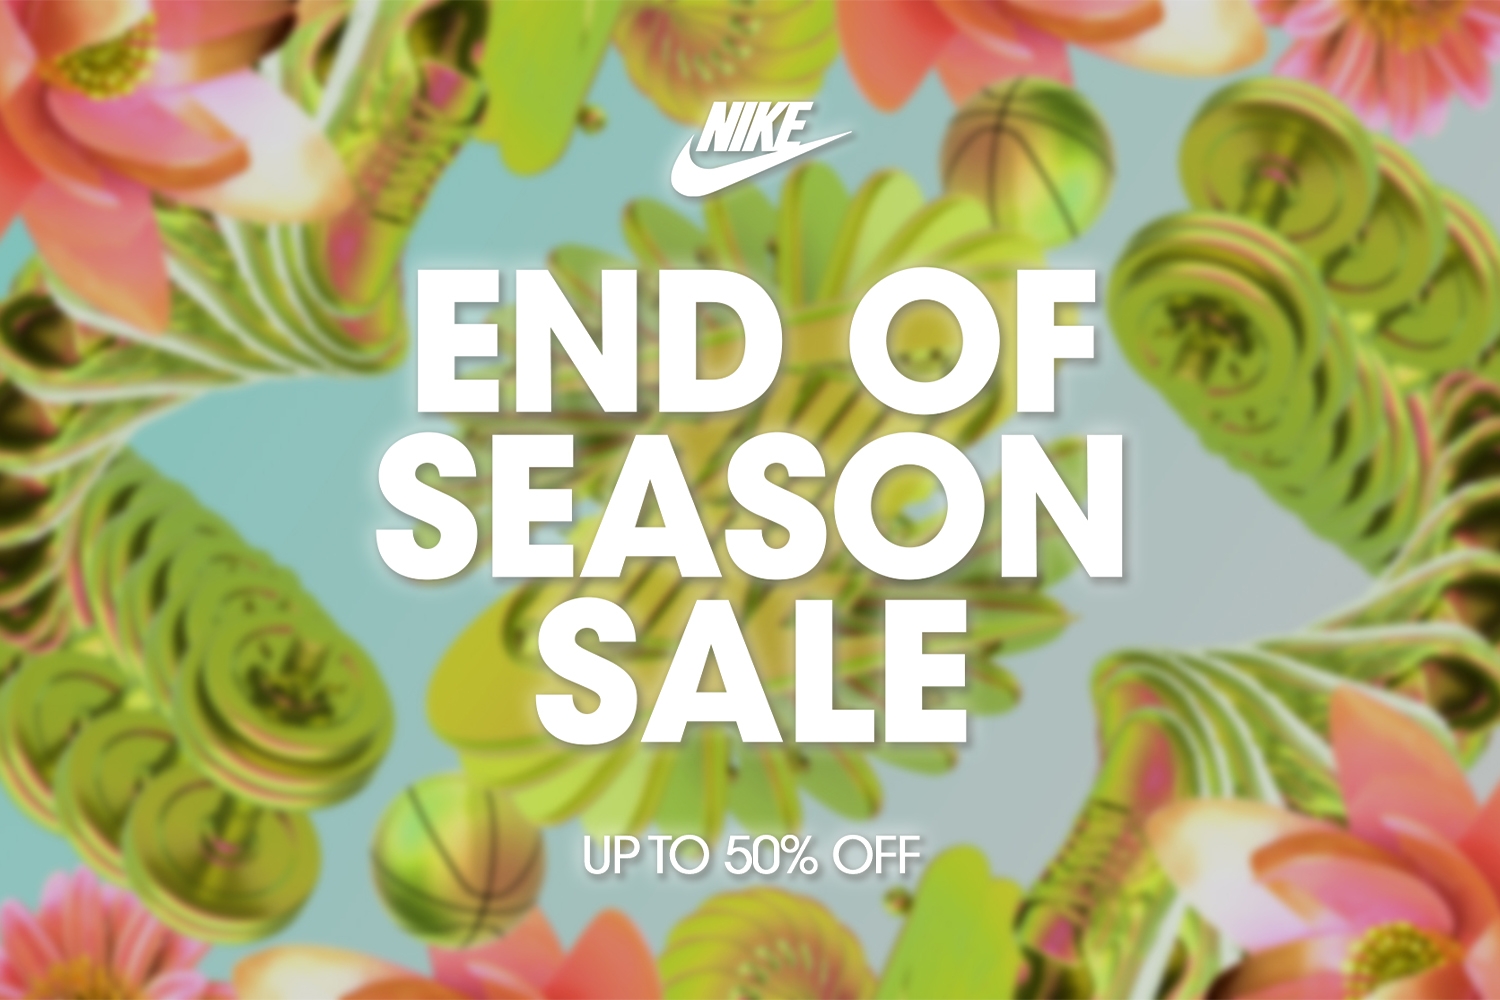 The Nike End Of Season Sale is live